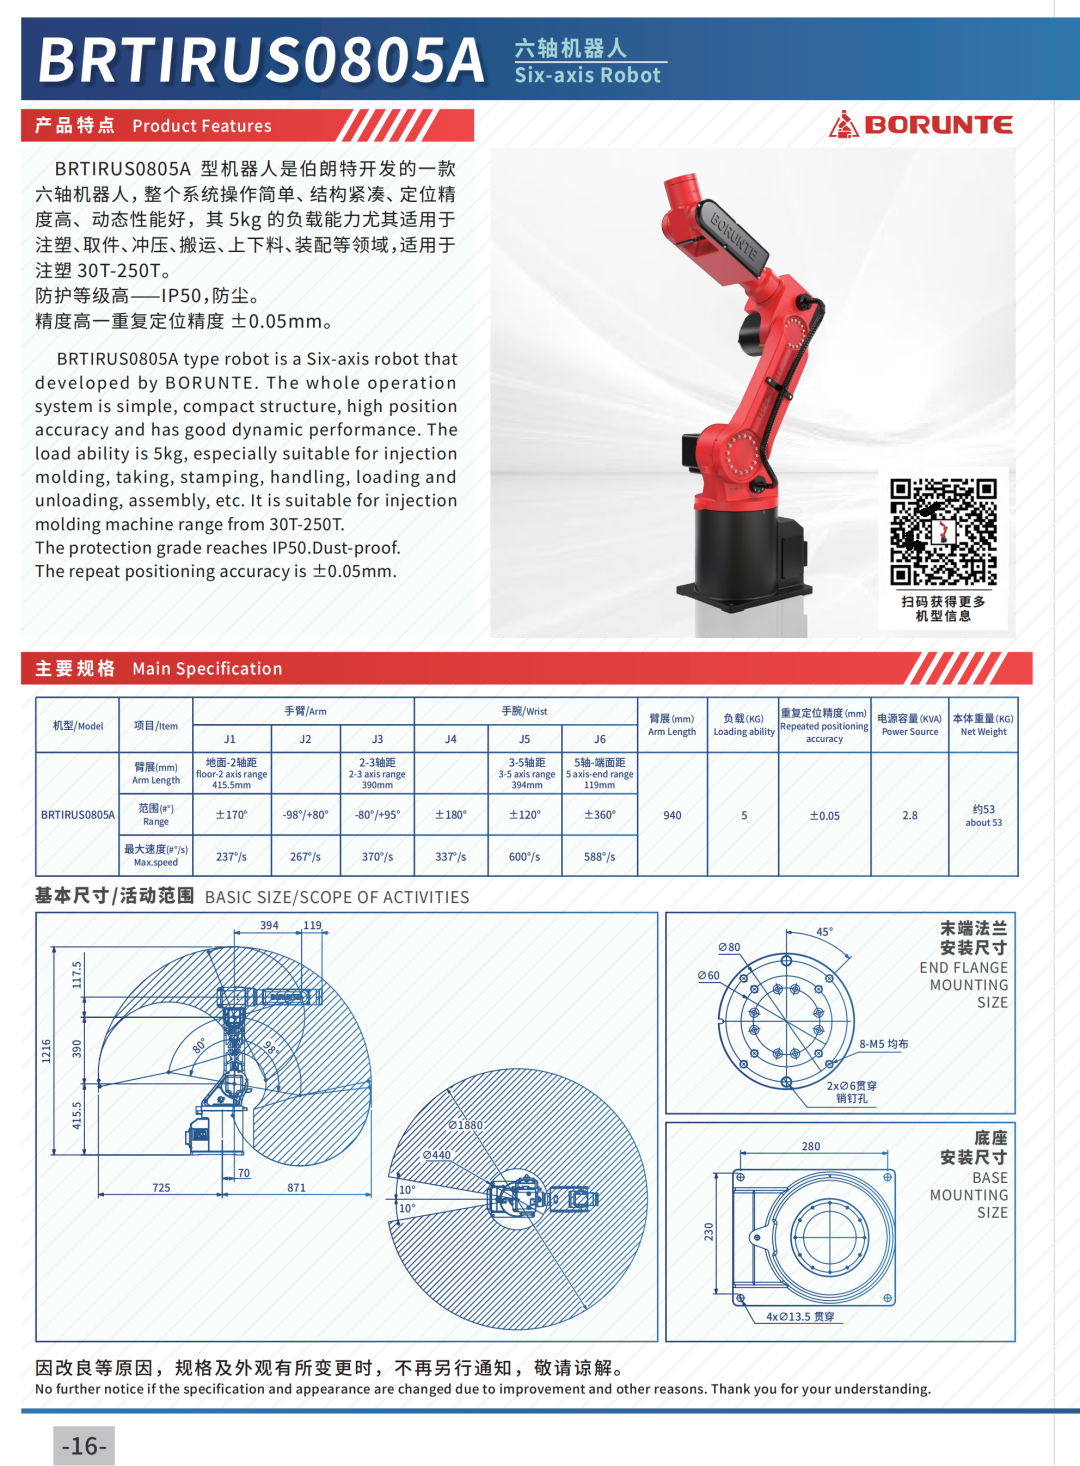 BRTIRWD1506A Six-axis Robot 4